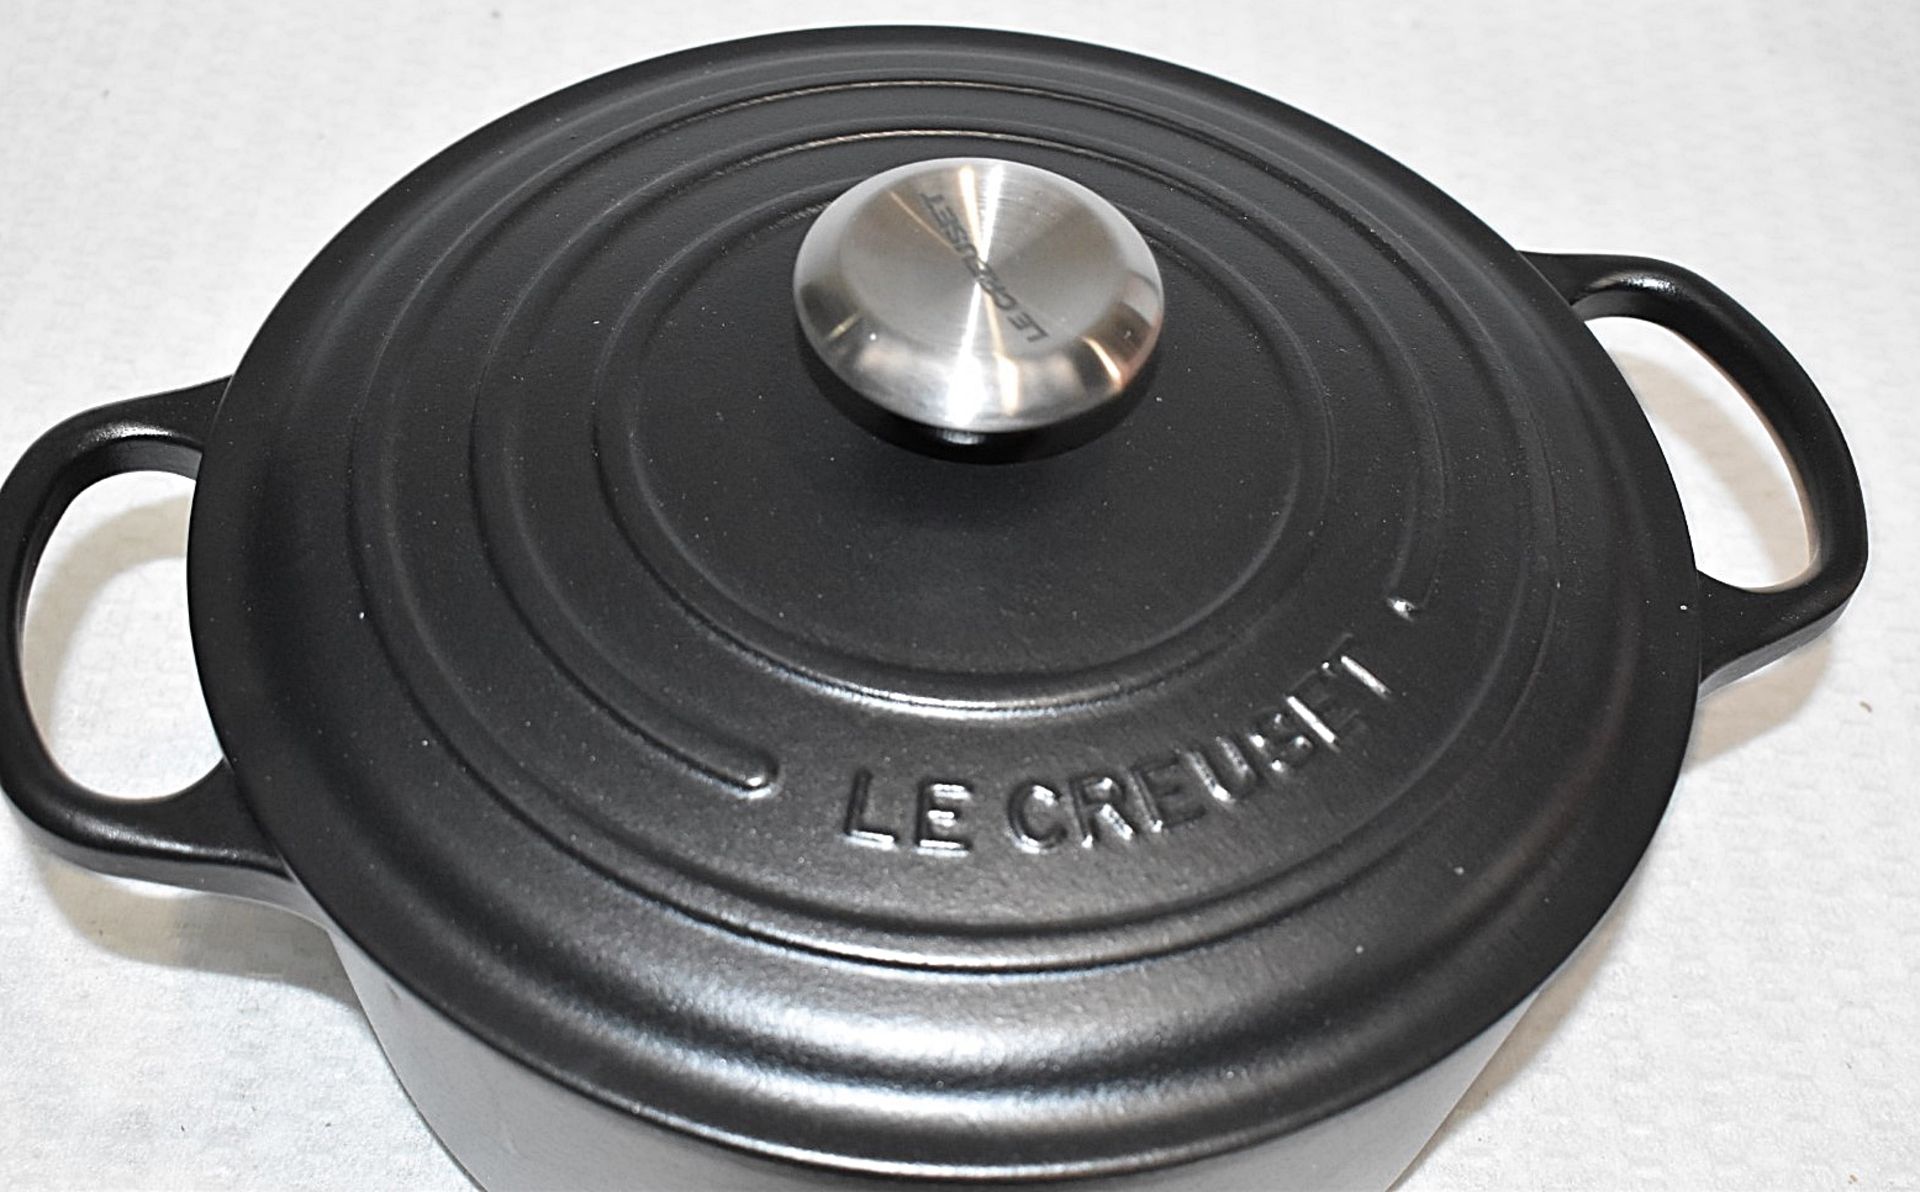 1 x LE CREUSET Round enamelled Cast Iron 24cm Casserole Dish, in Matt Black - Original RRP £190.00 - Image 10 of 12